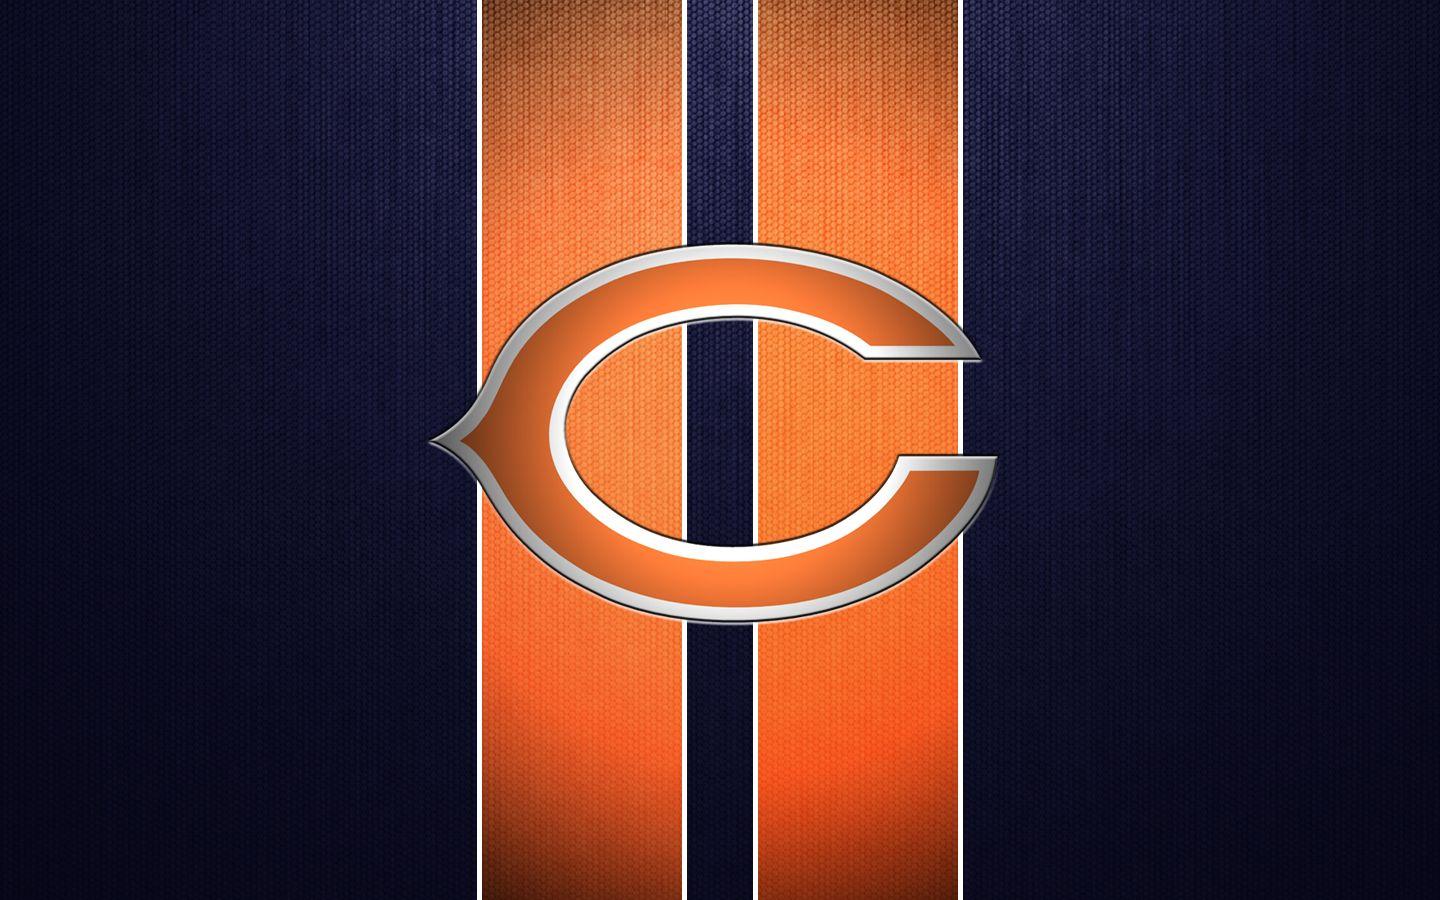 Chicago Bears Image